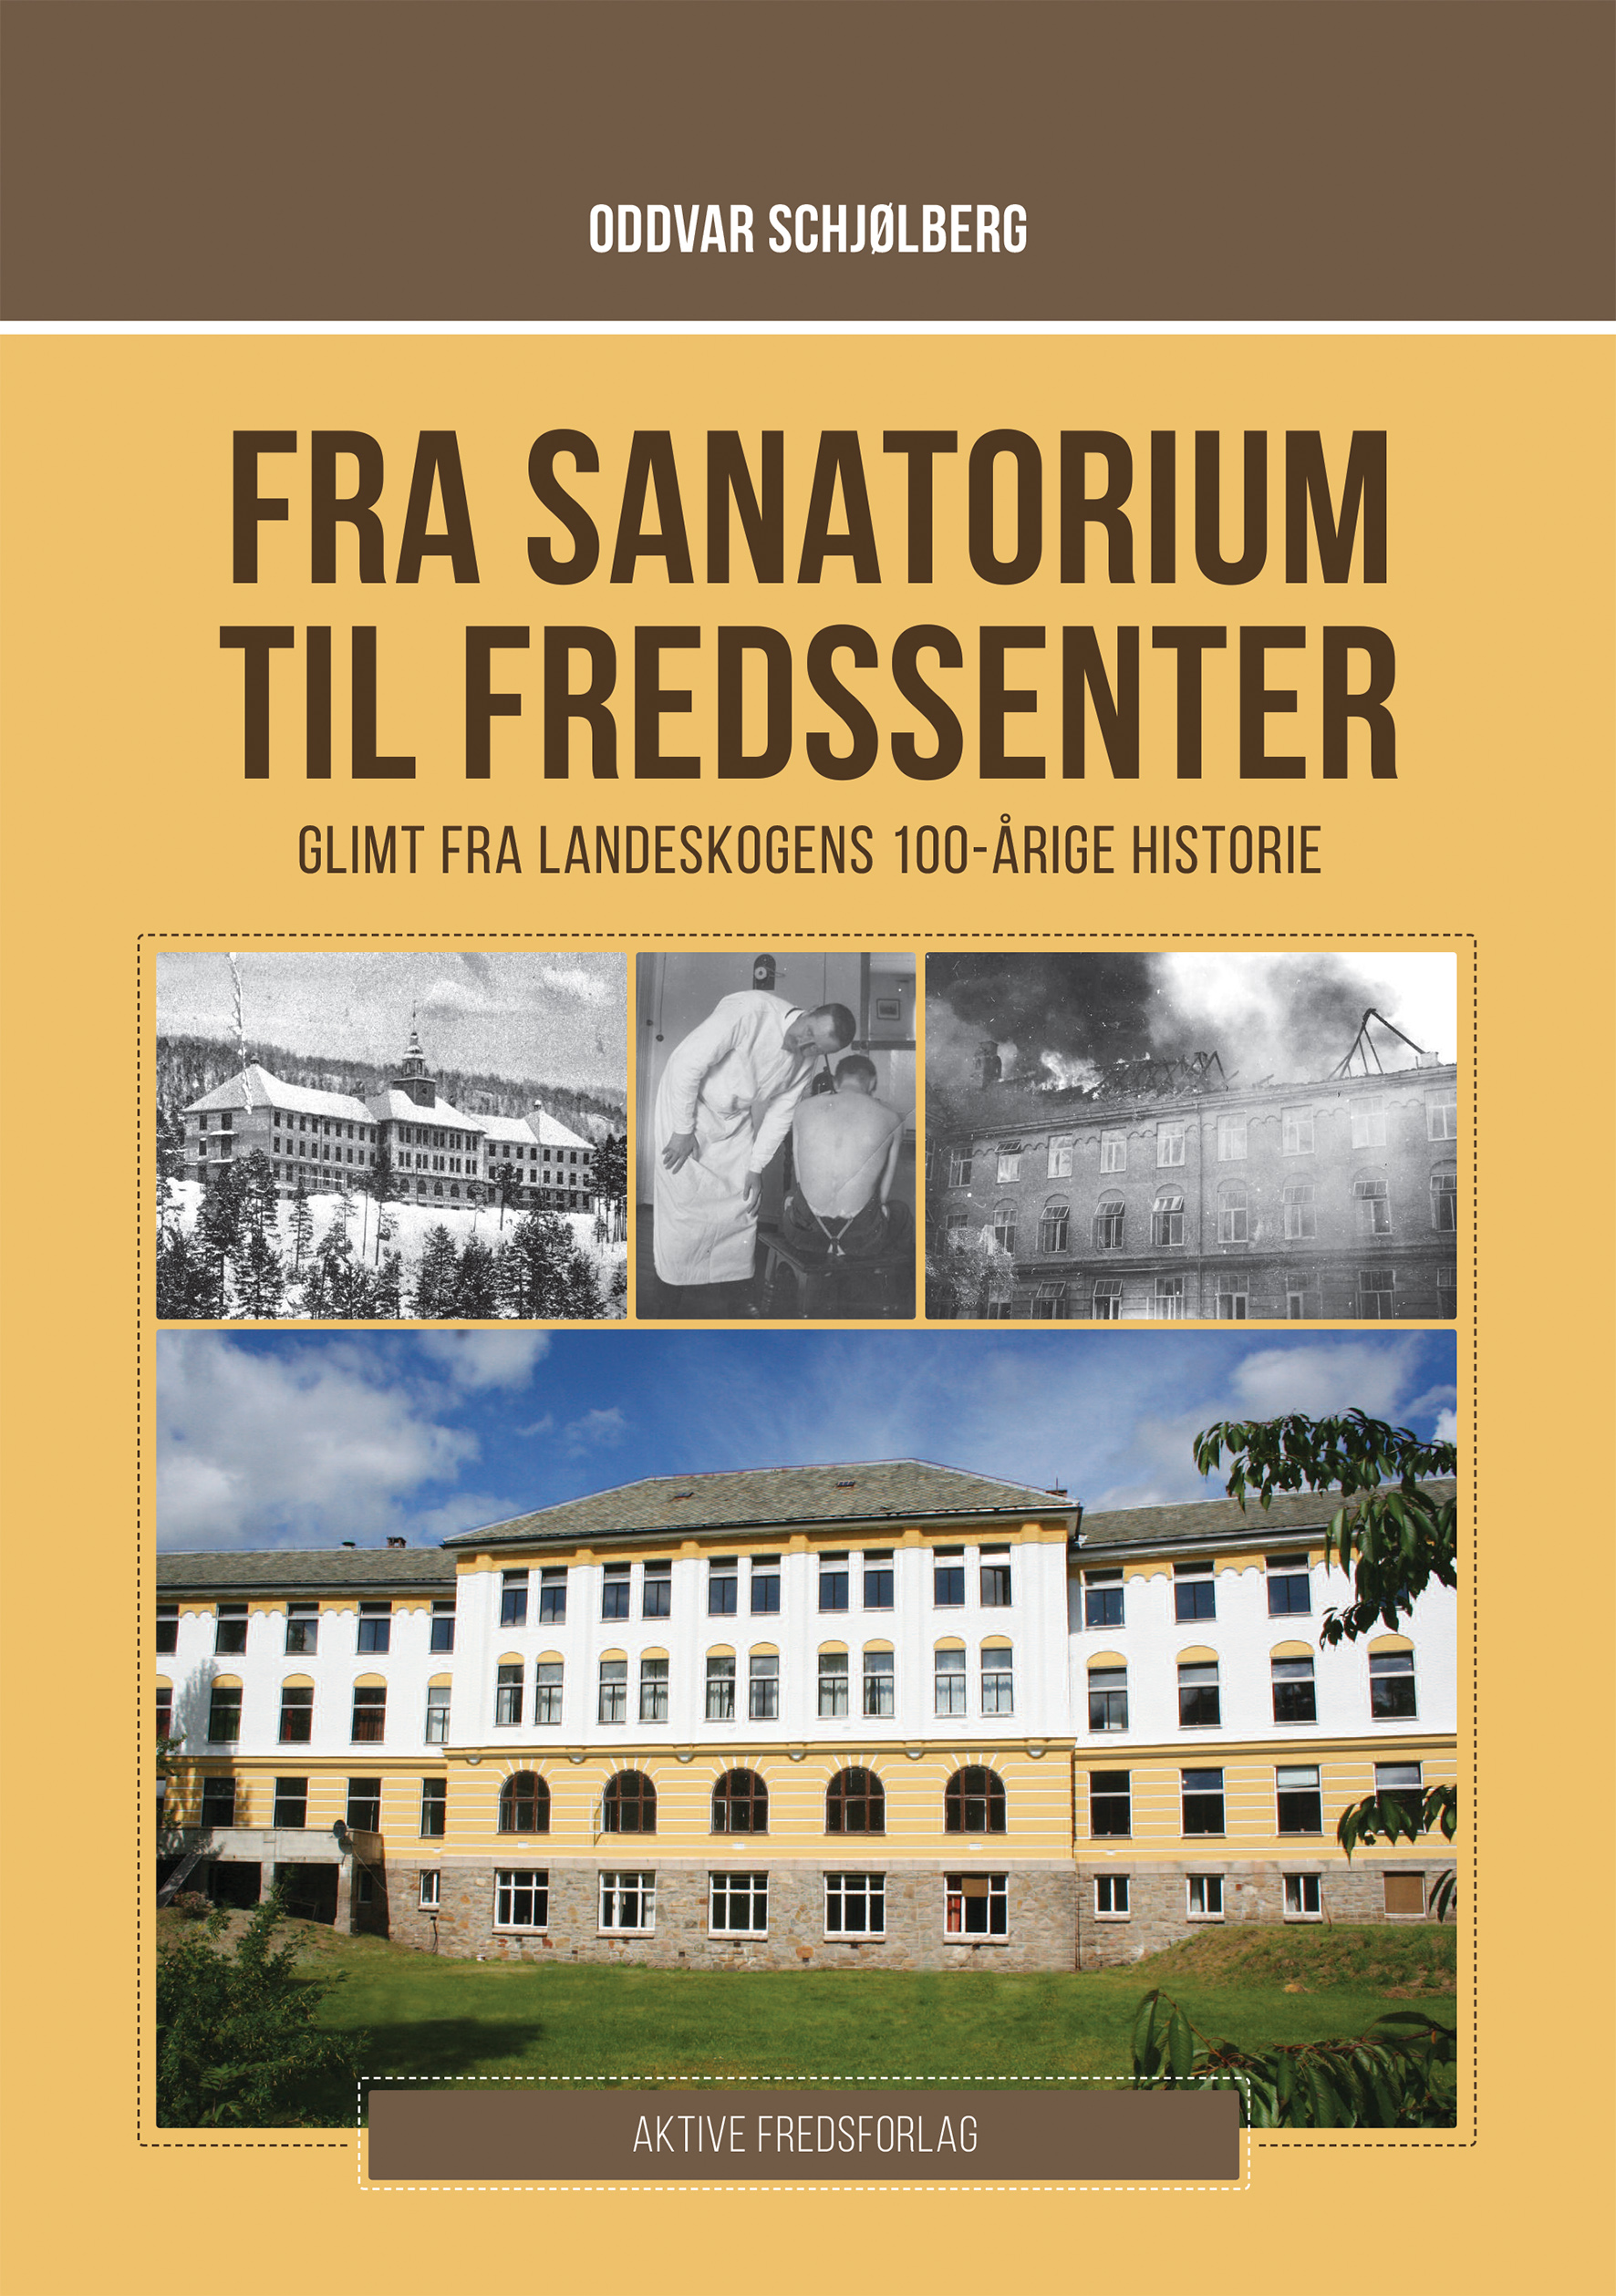 Landeskogen 100 år - Fra sanatorium til fredssenter